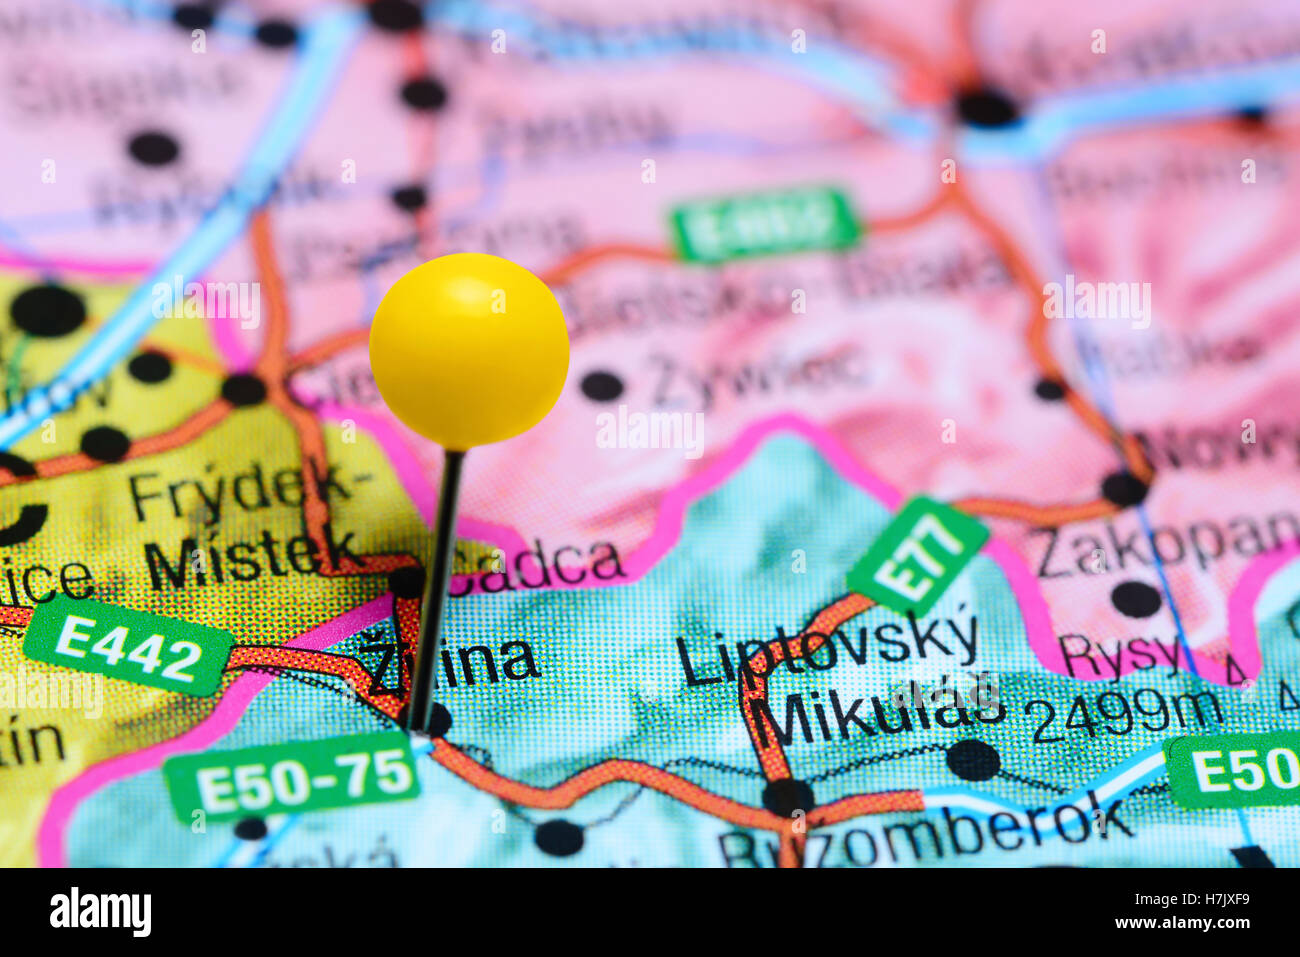 Zilina pinned on a map of Slovakia Stock Photo